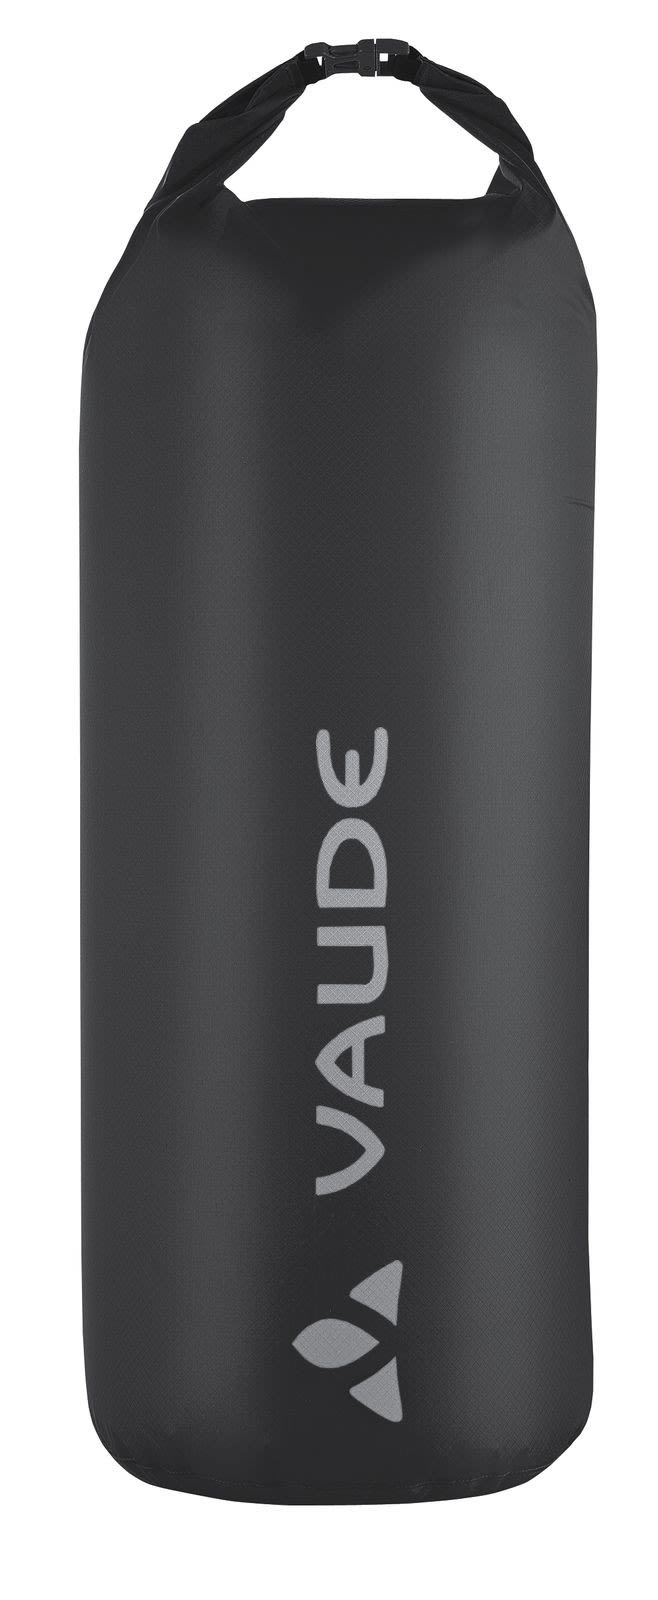 Vaude Drybag Cordura Light 20L Grau- Packscke- Grsse 20l - Farbe Anthracite unter Vaude